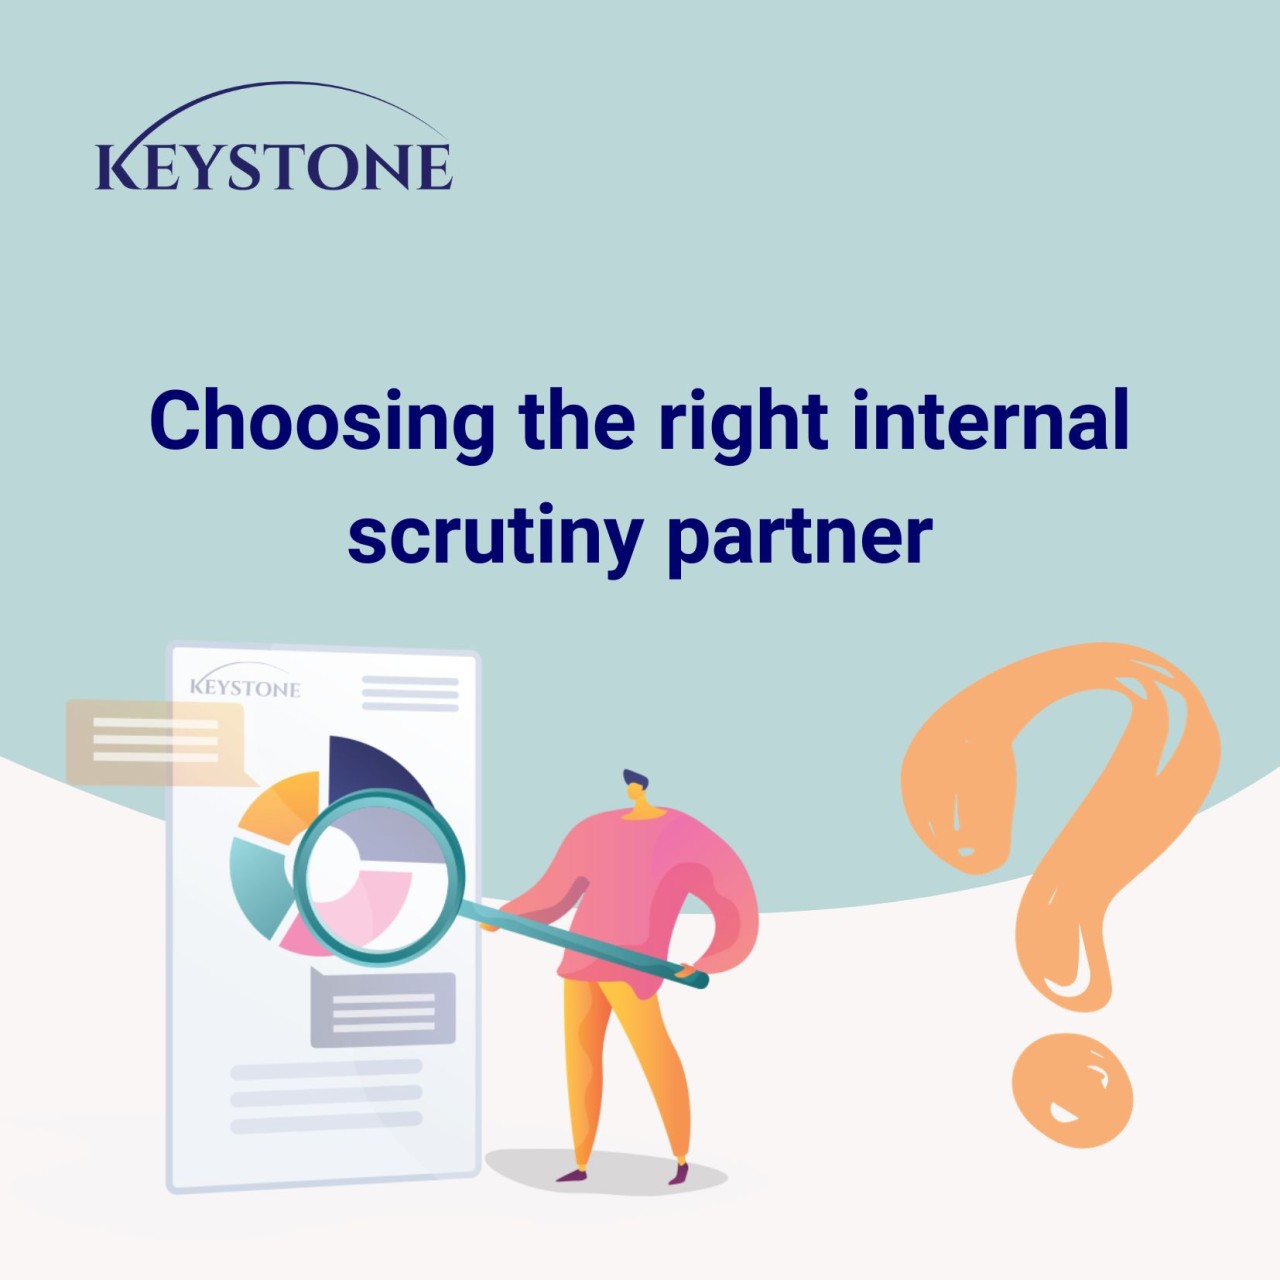 Choosing the right internal scrutiny partner